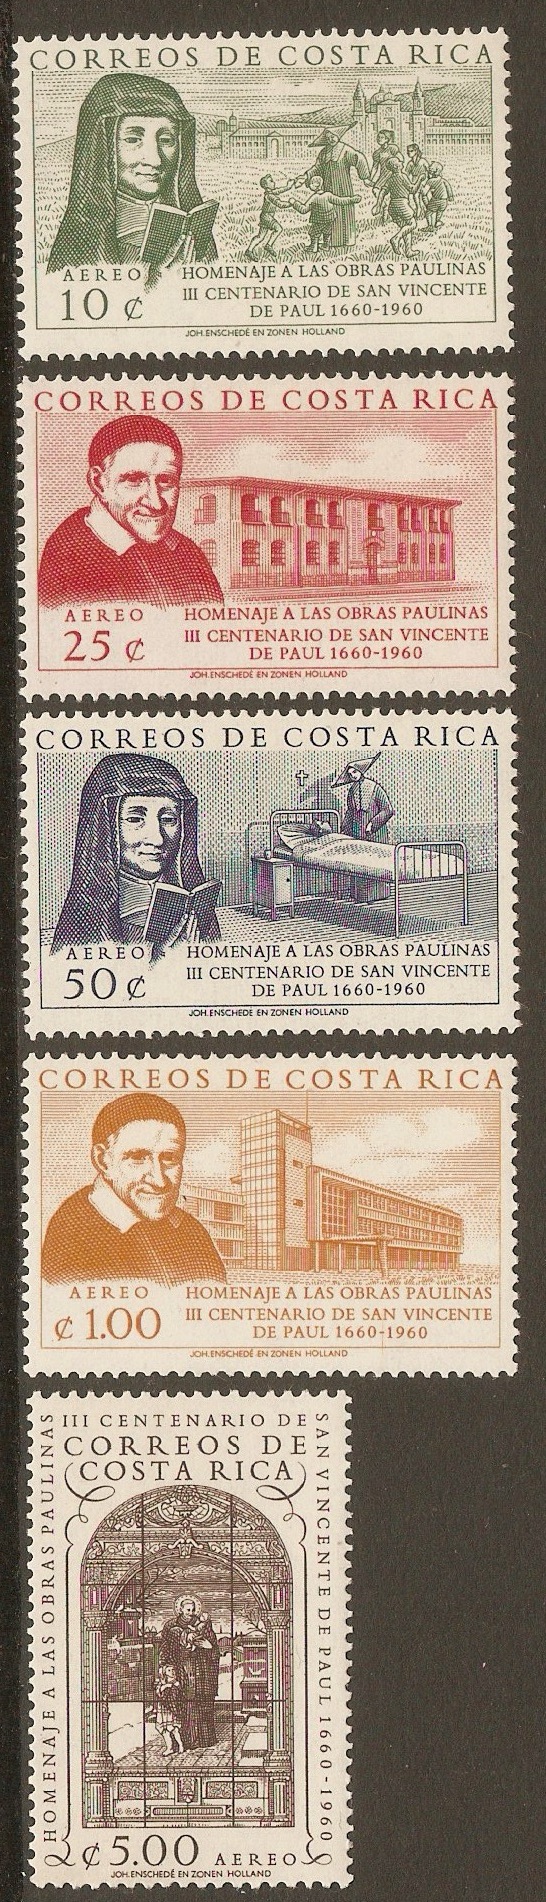 Costa Rica 1960 St. Vincent de Paul Anniversary set. SG594-SG598